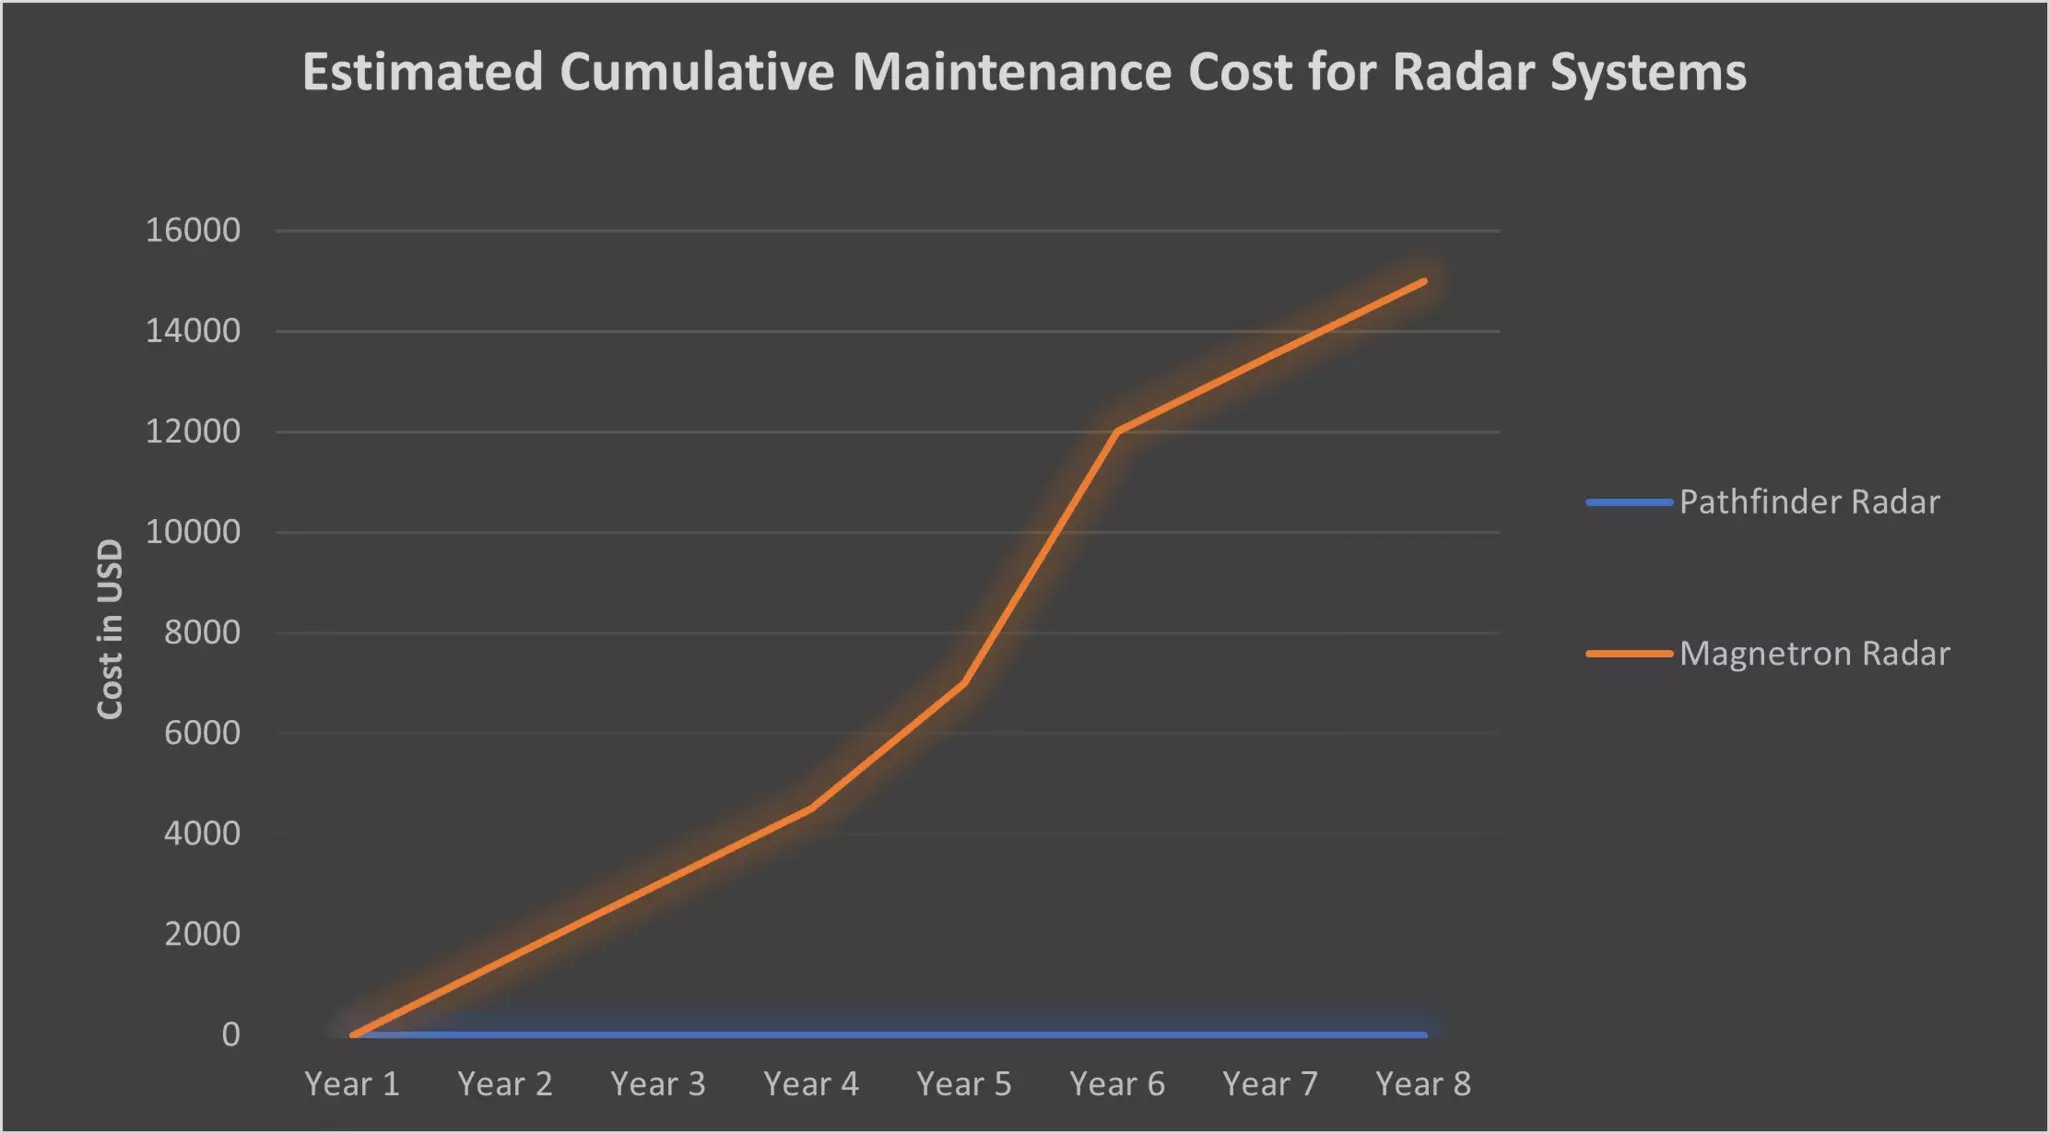 Pathfinder versus Magnetron Radar Service Costs